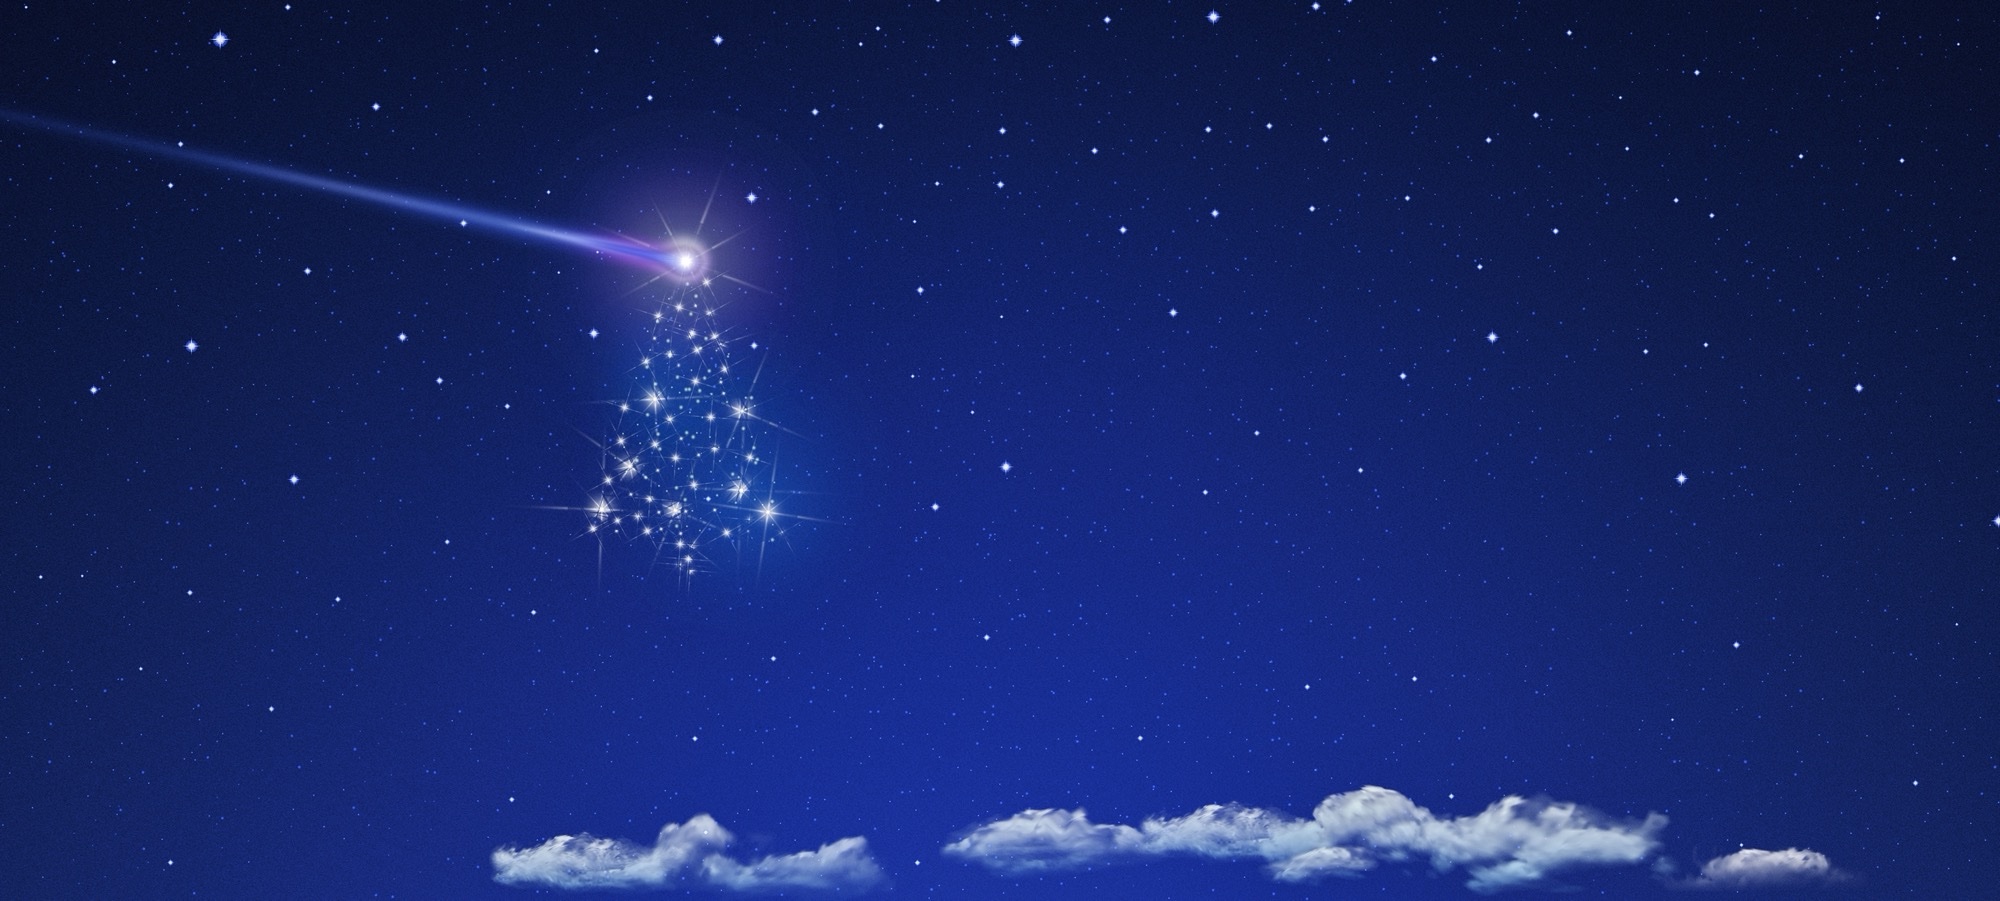 Comet tree topper in a starry sky